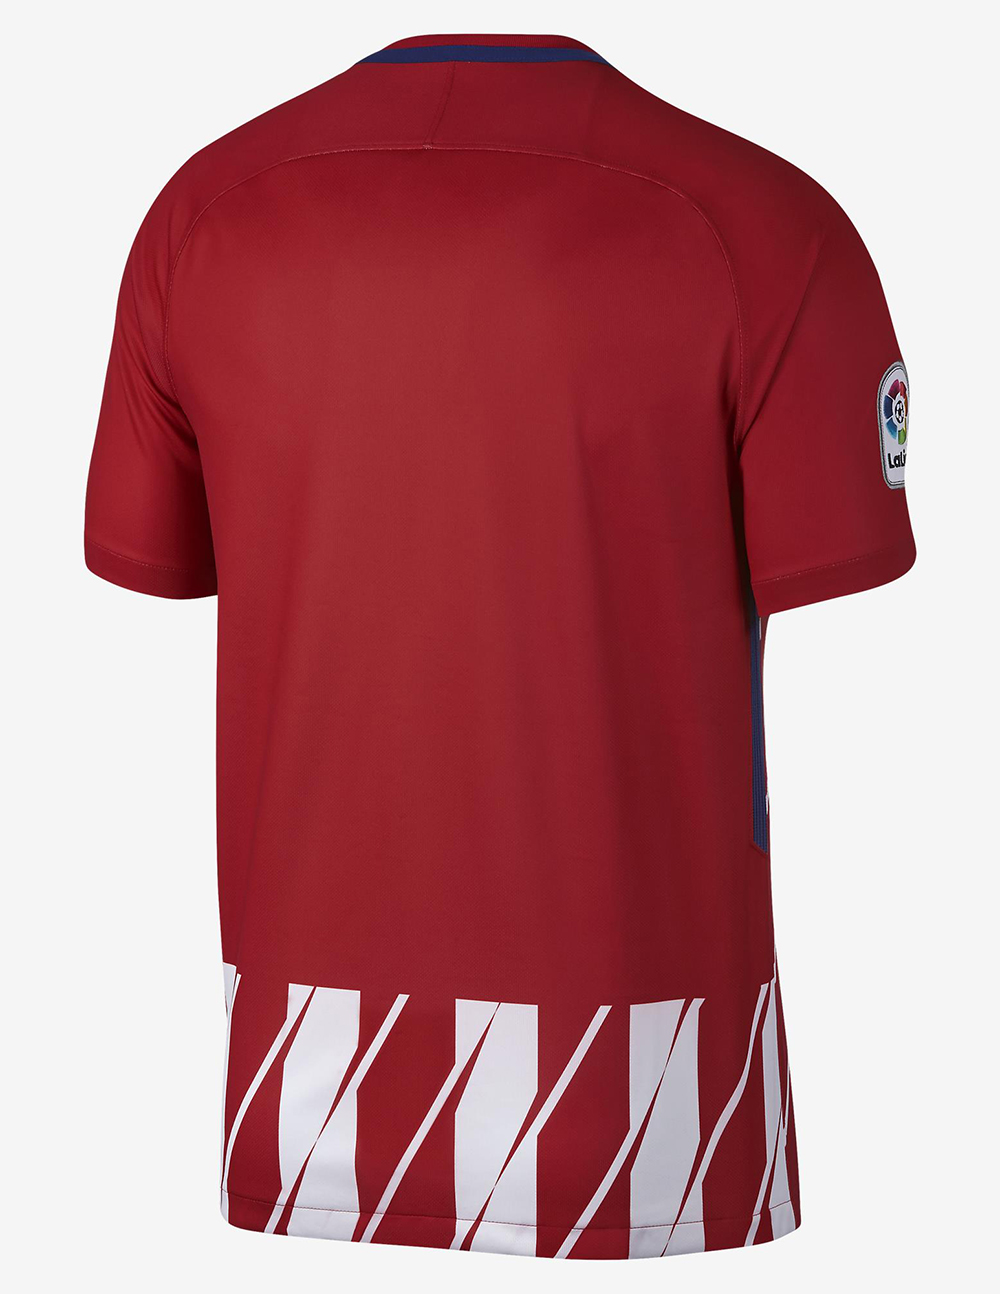 Camiseta titular Nike del Atlético Madrid 2017 18